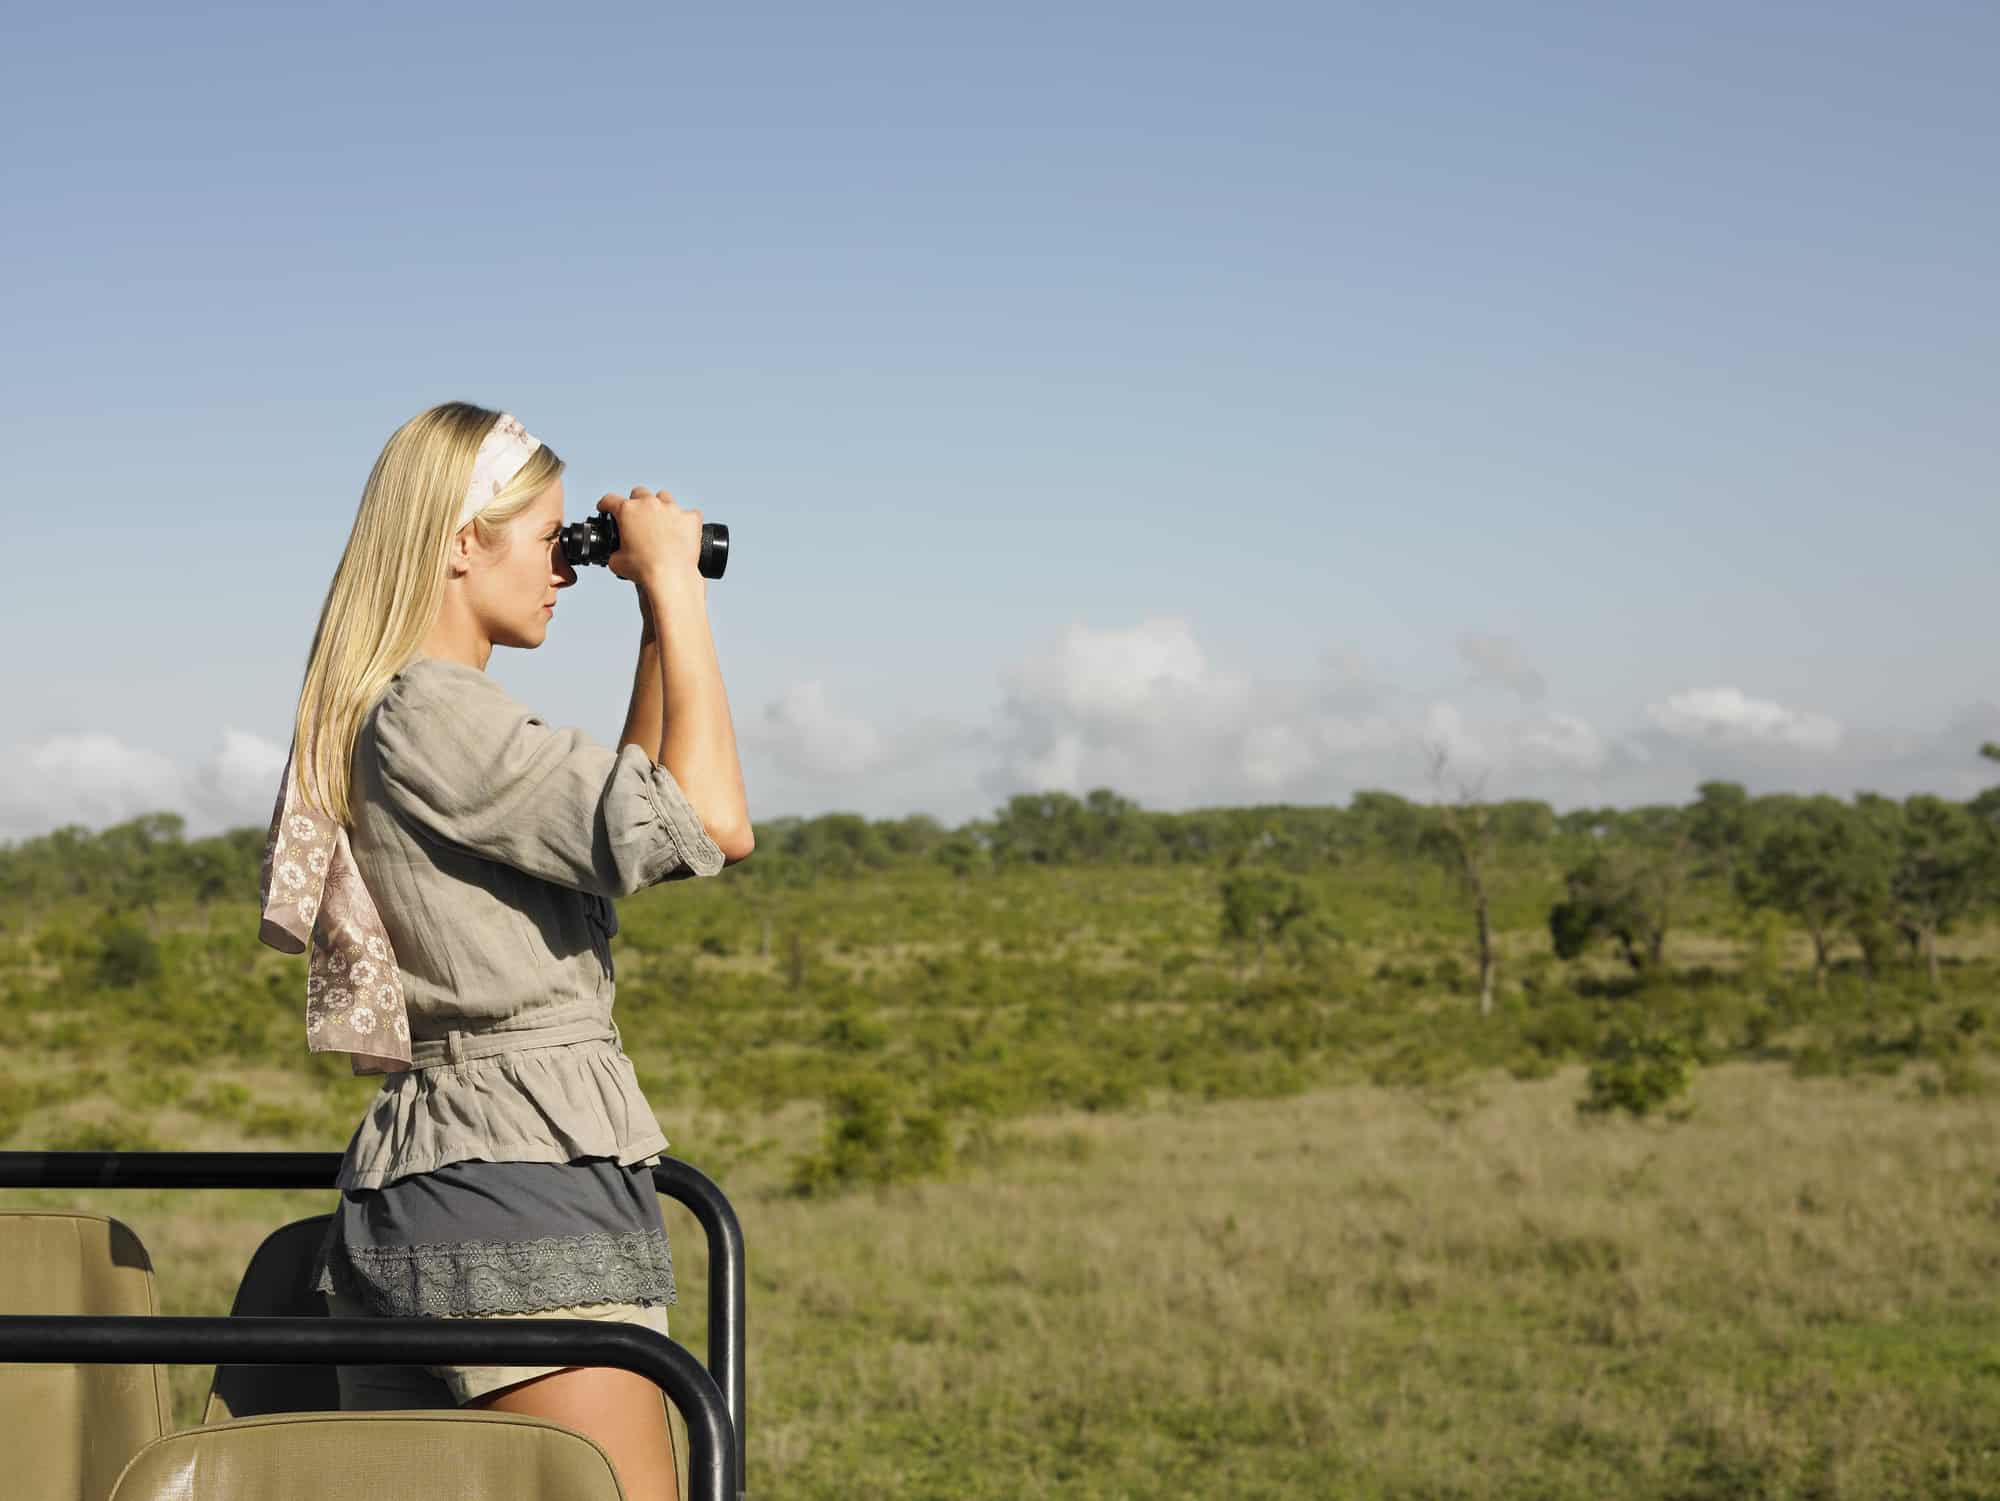 11 Best Binoculars for Safari in Africa – Buying Guide 2022